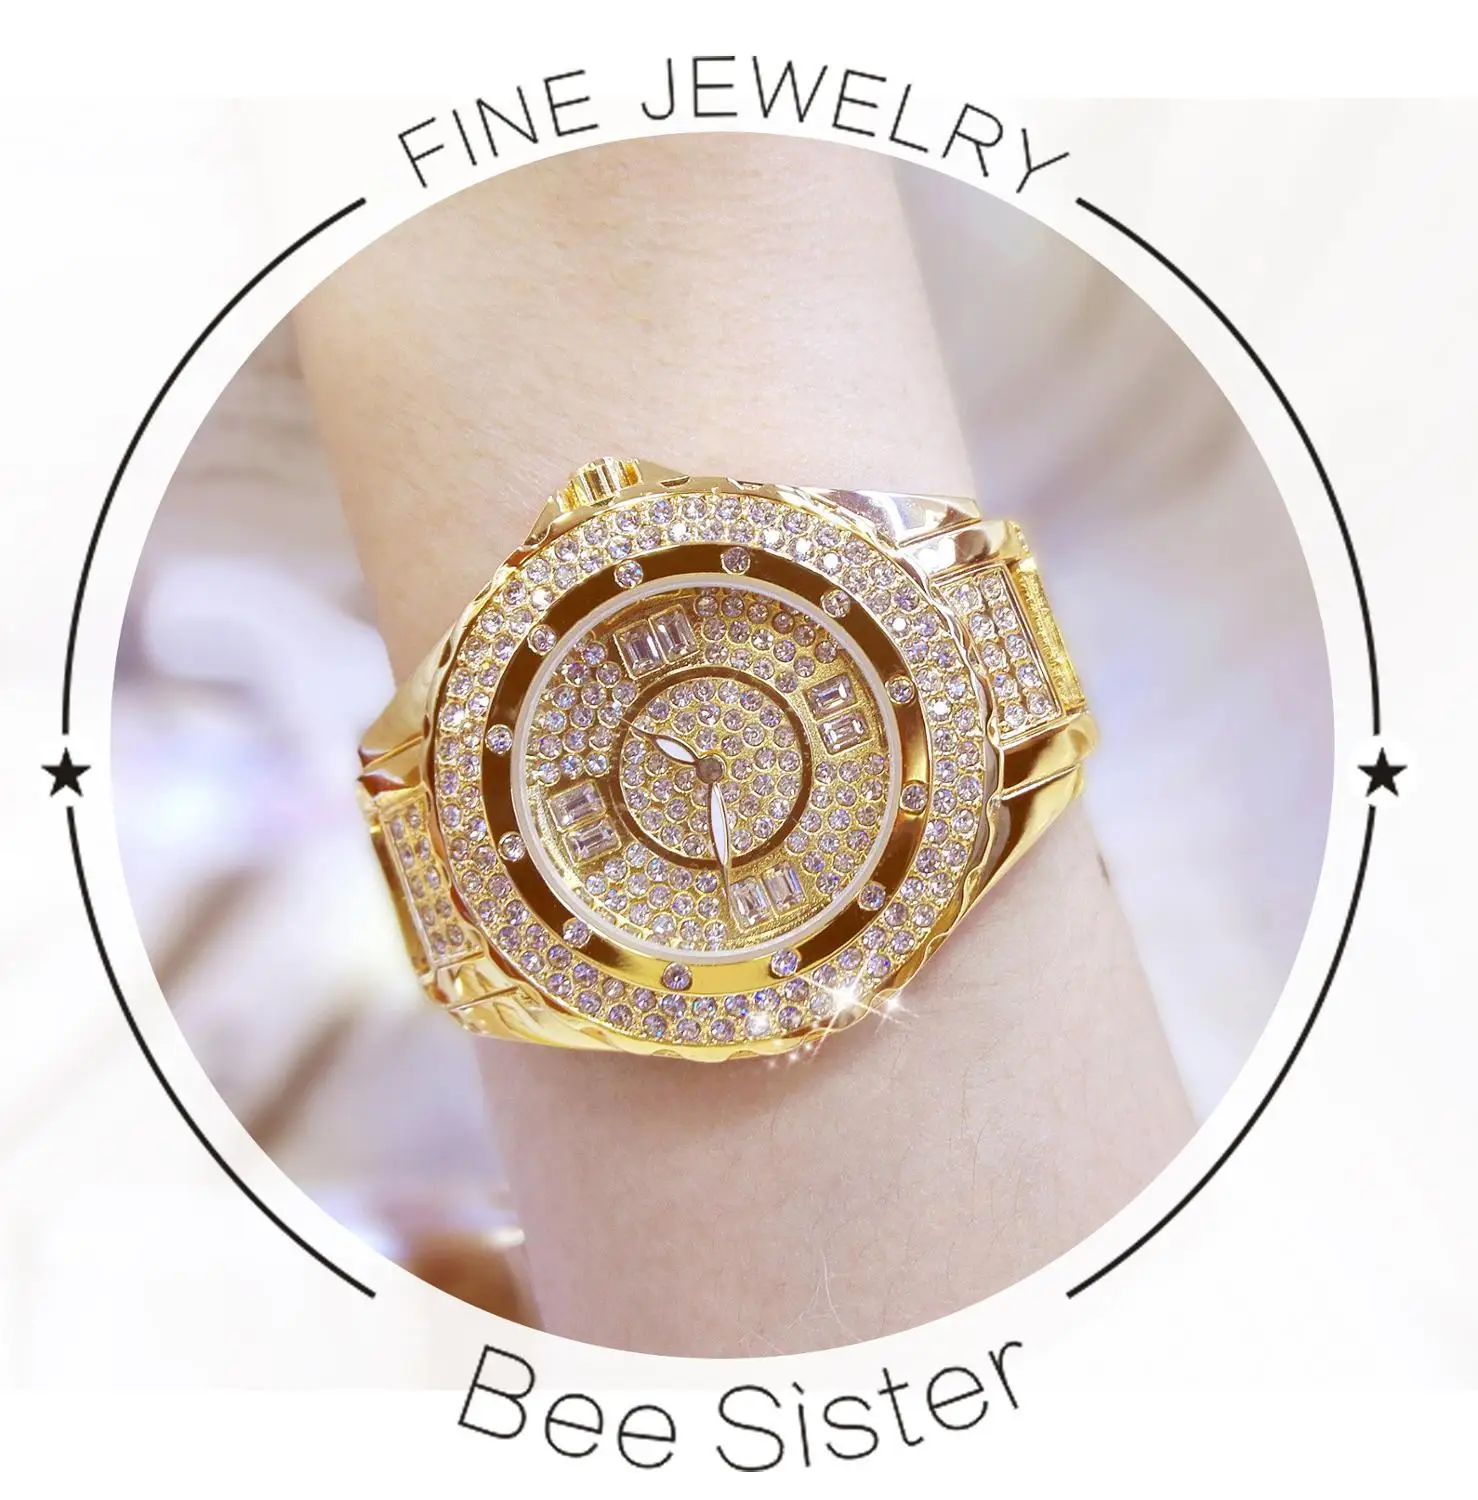 Czechダイヤモンド、星空の時計、妻へのギフト、人気セール、2023年の女性用腕時計